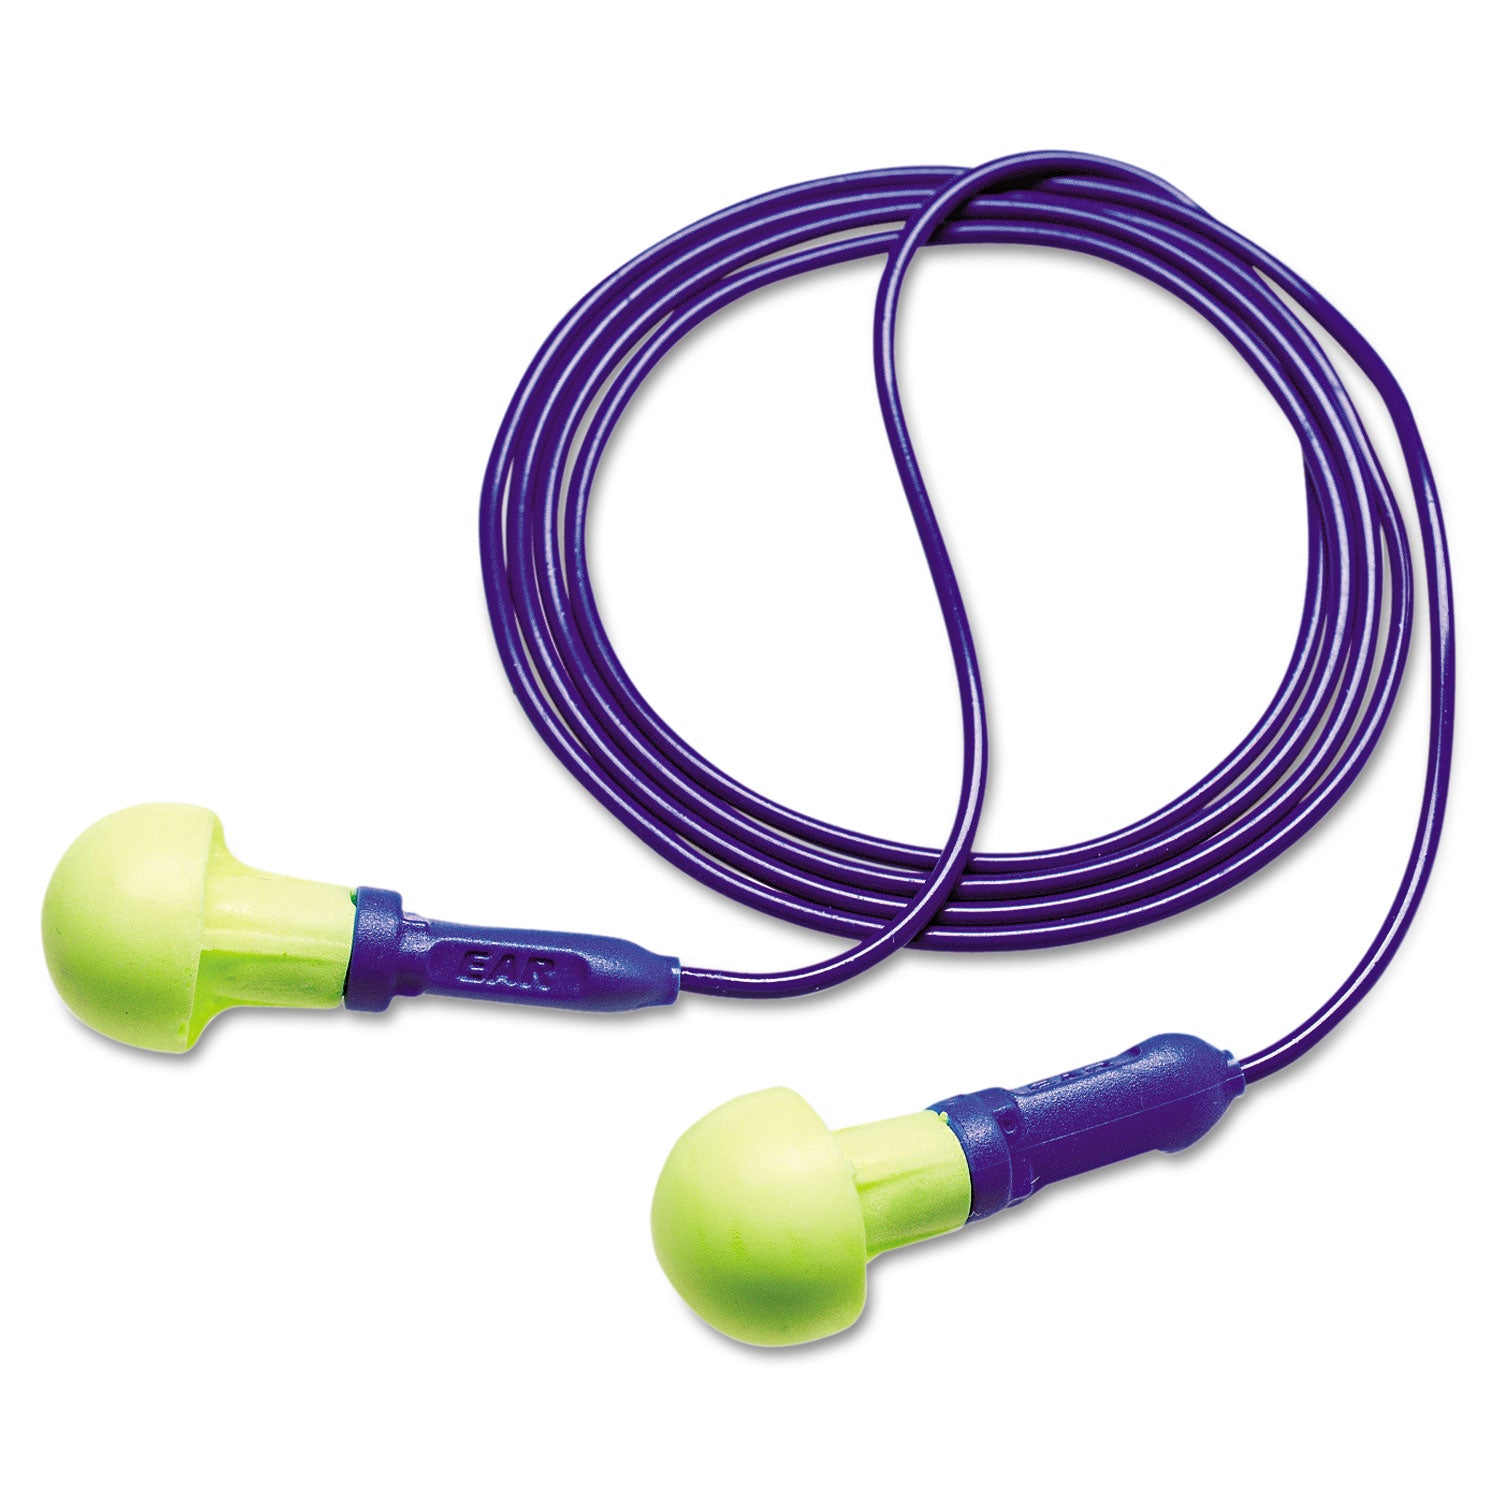 ear-push-ins-reusable-earplugs-corded-28-db-nrr-blue-yellow-100-pairs_mmm3181001 - 1